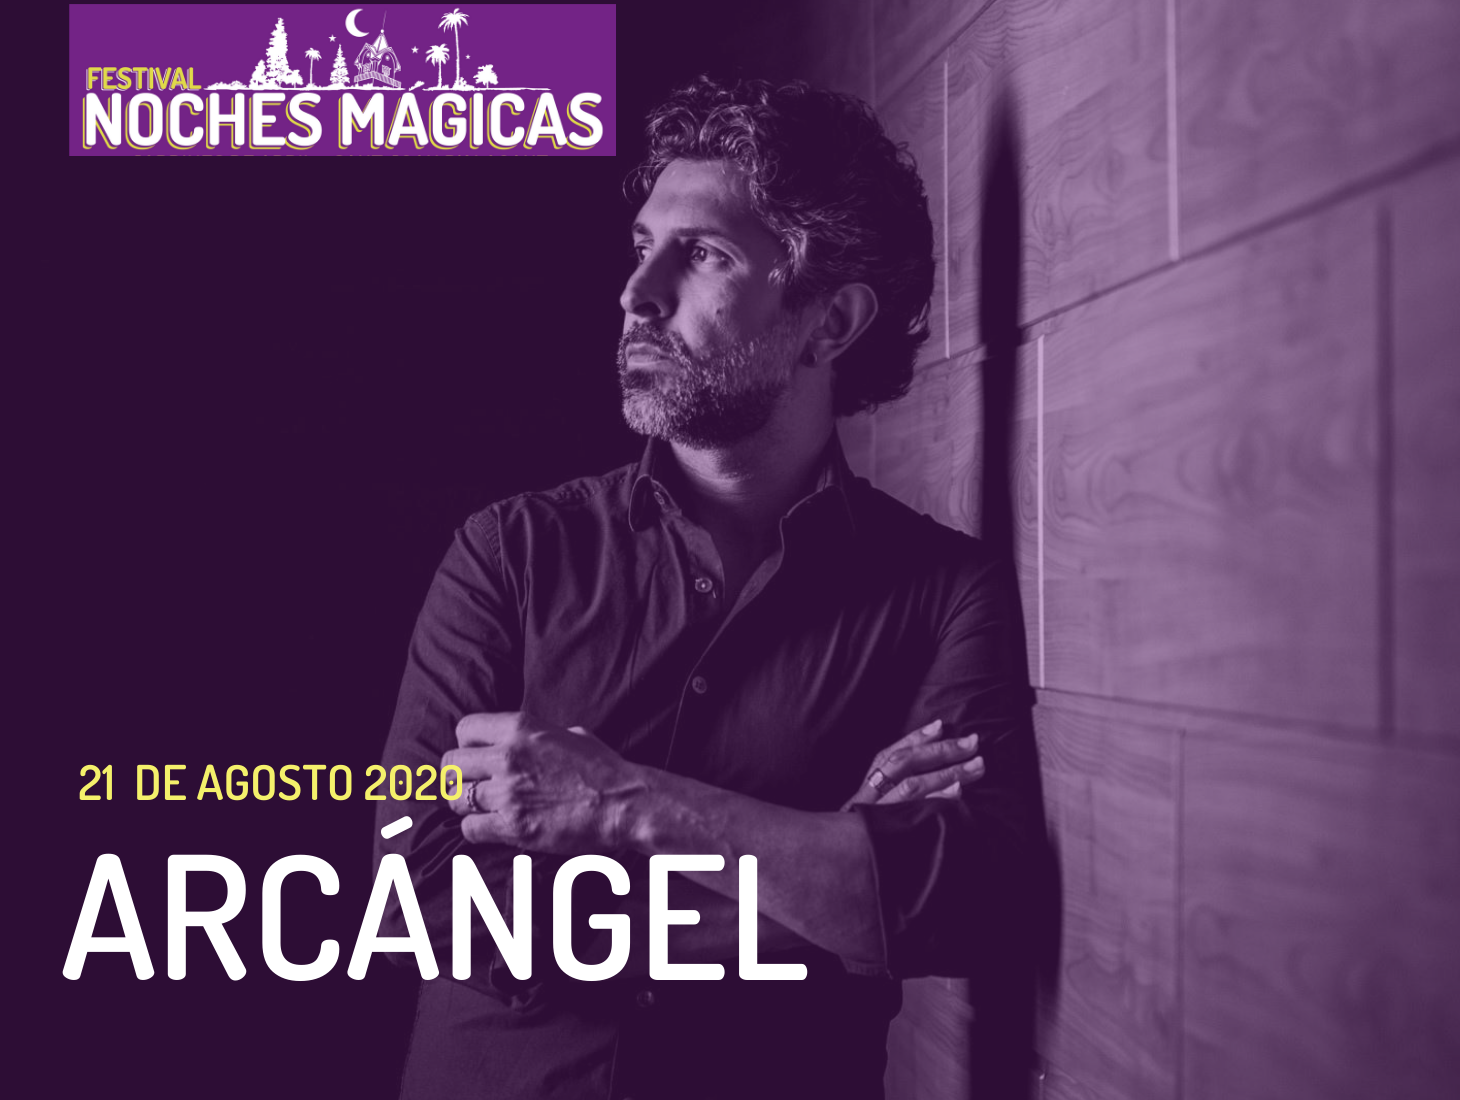 noches-magicas-arcangel-flamenco-5f23e1666a62c.png